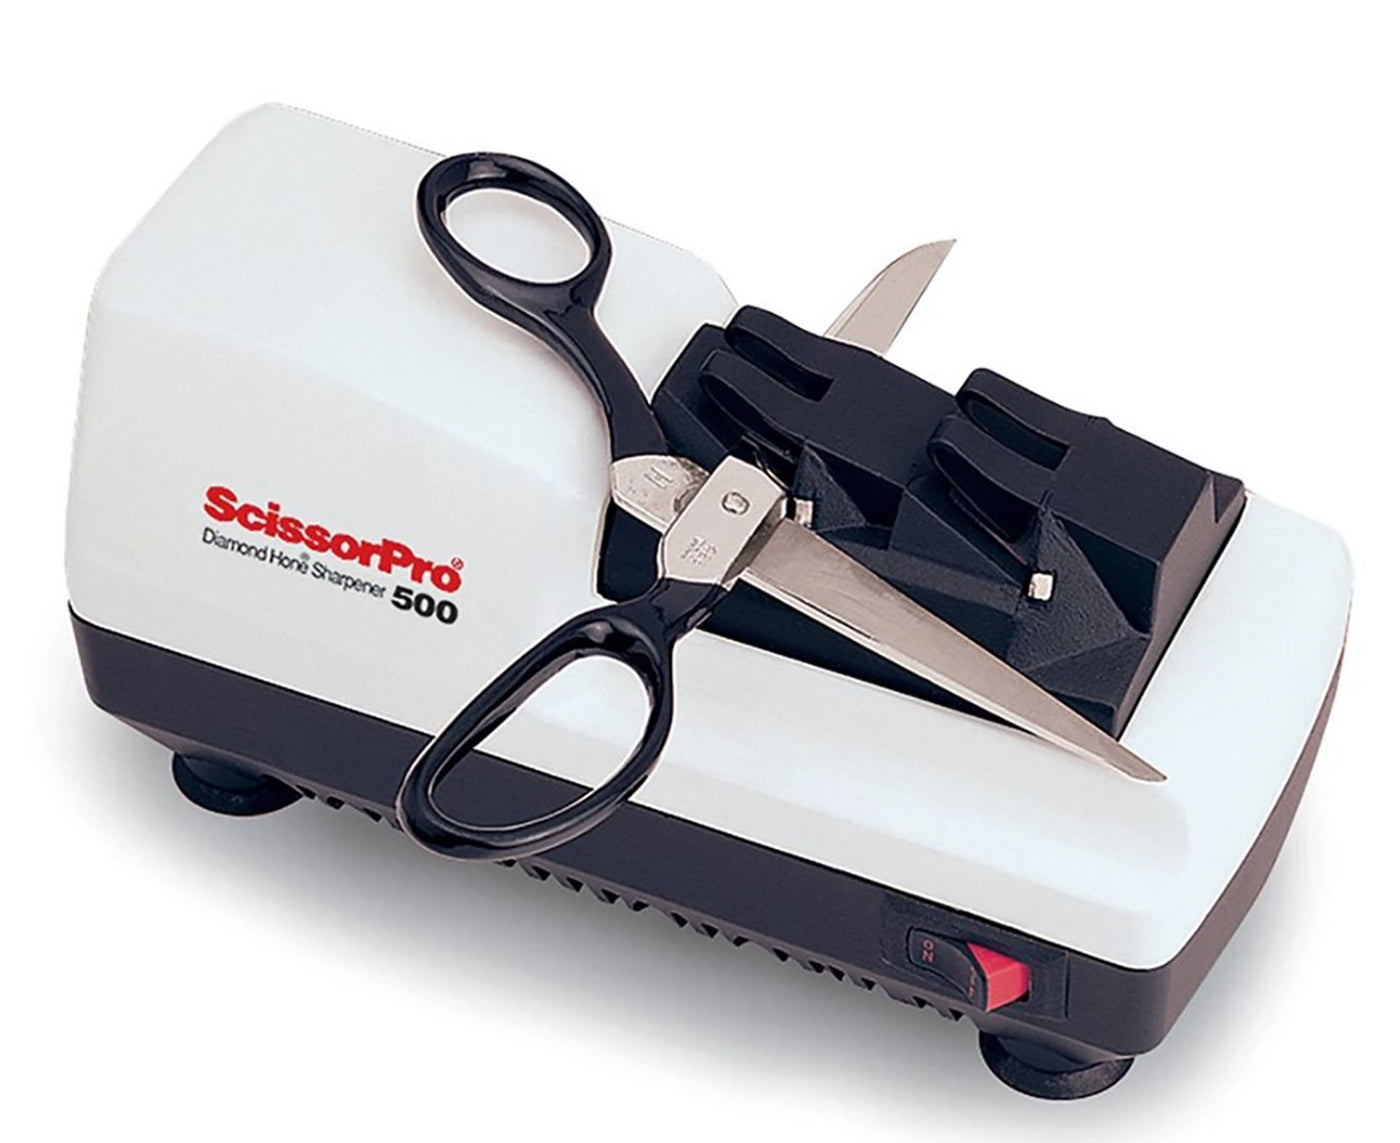 ScissorPro Diamond Hone Electric Scissors Sharpener Model 500